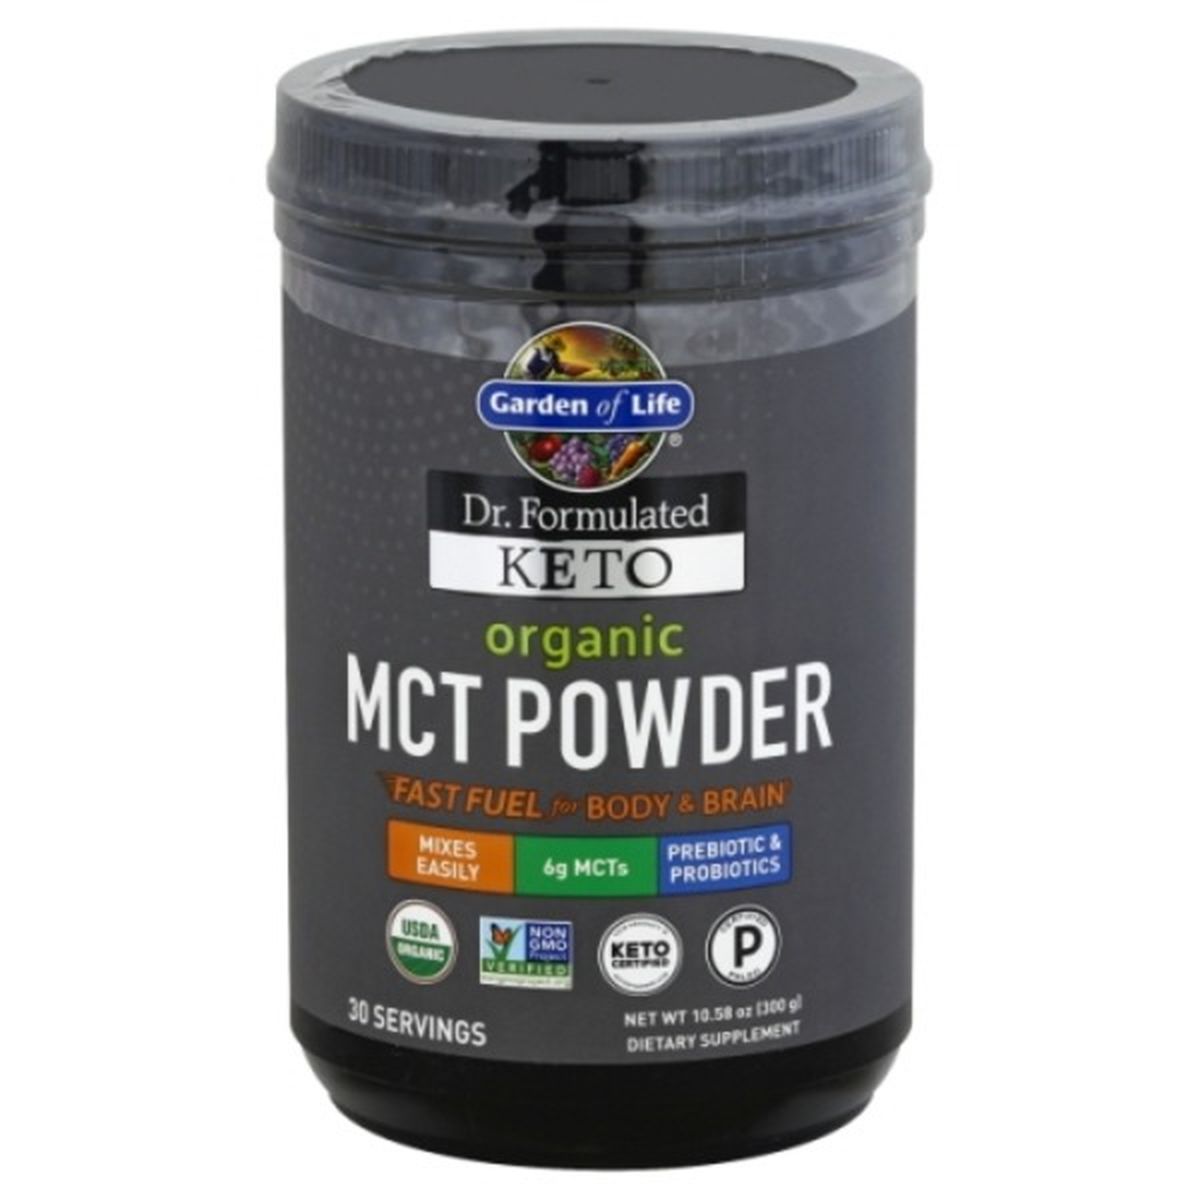 Calories in Garden of Life MCT Powder, Organic